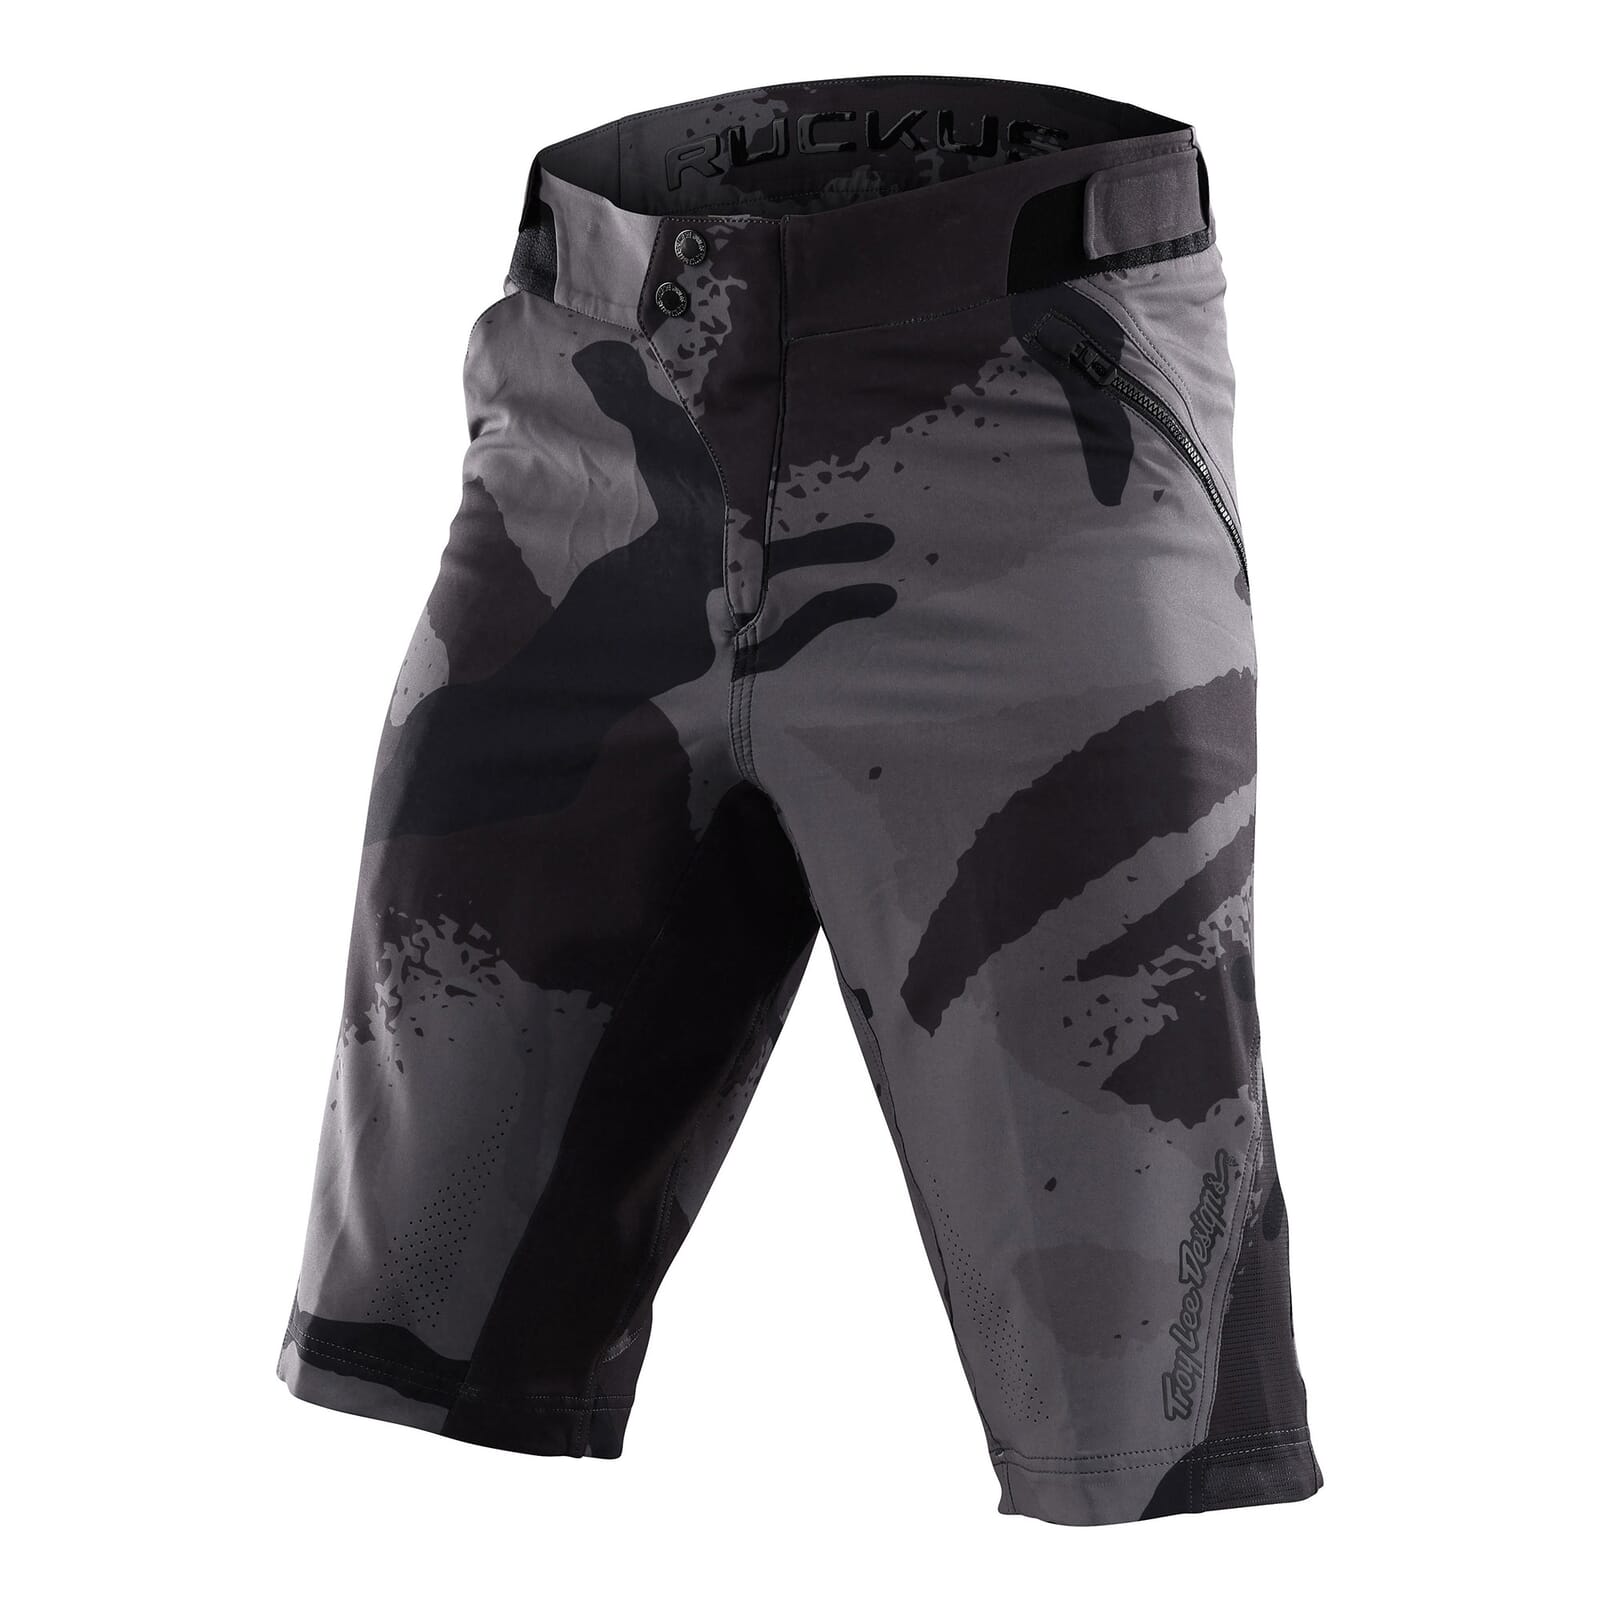 Troy Lee Designs Ruckus Shell Shorts